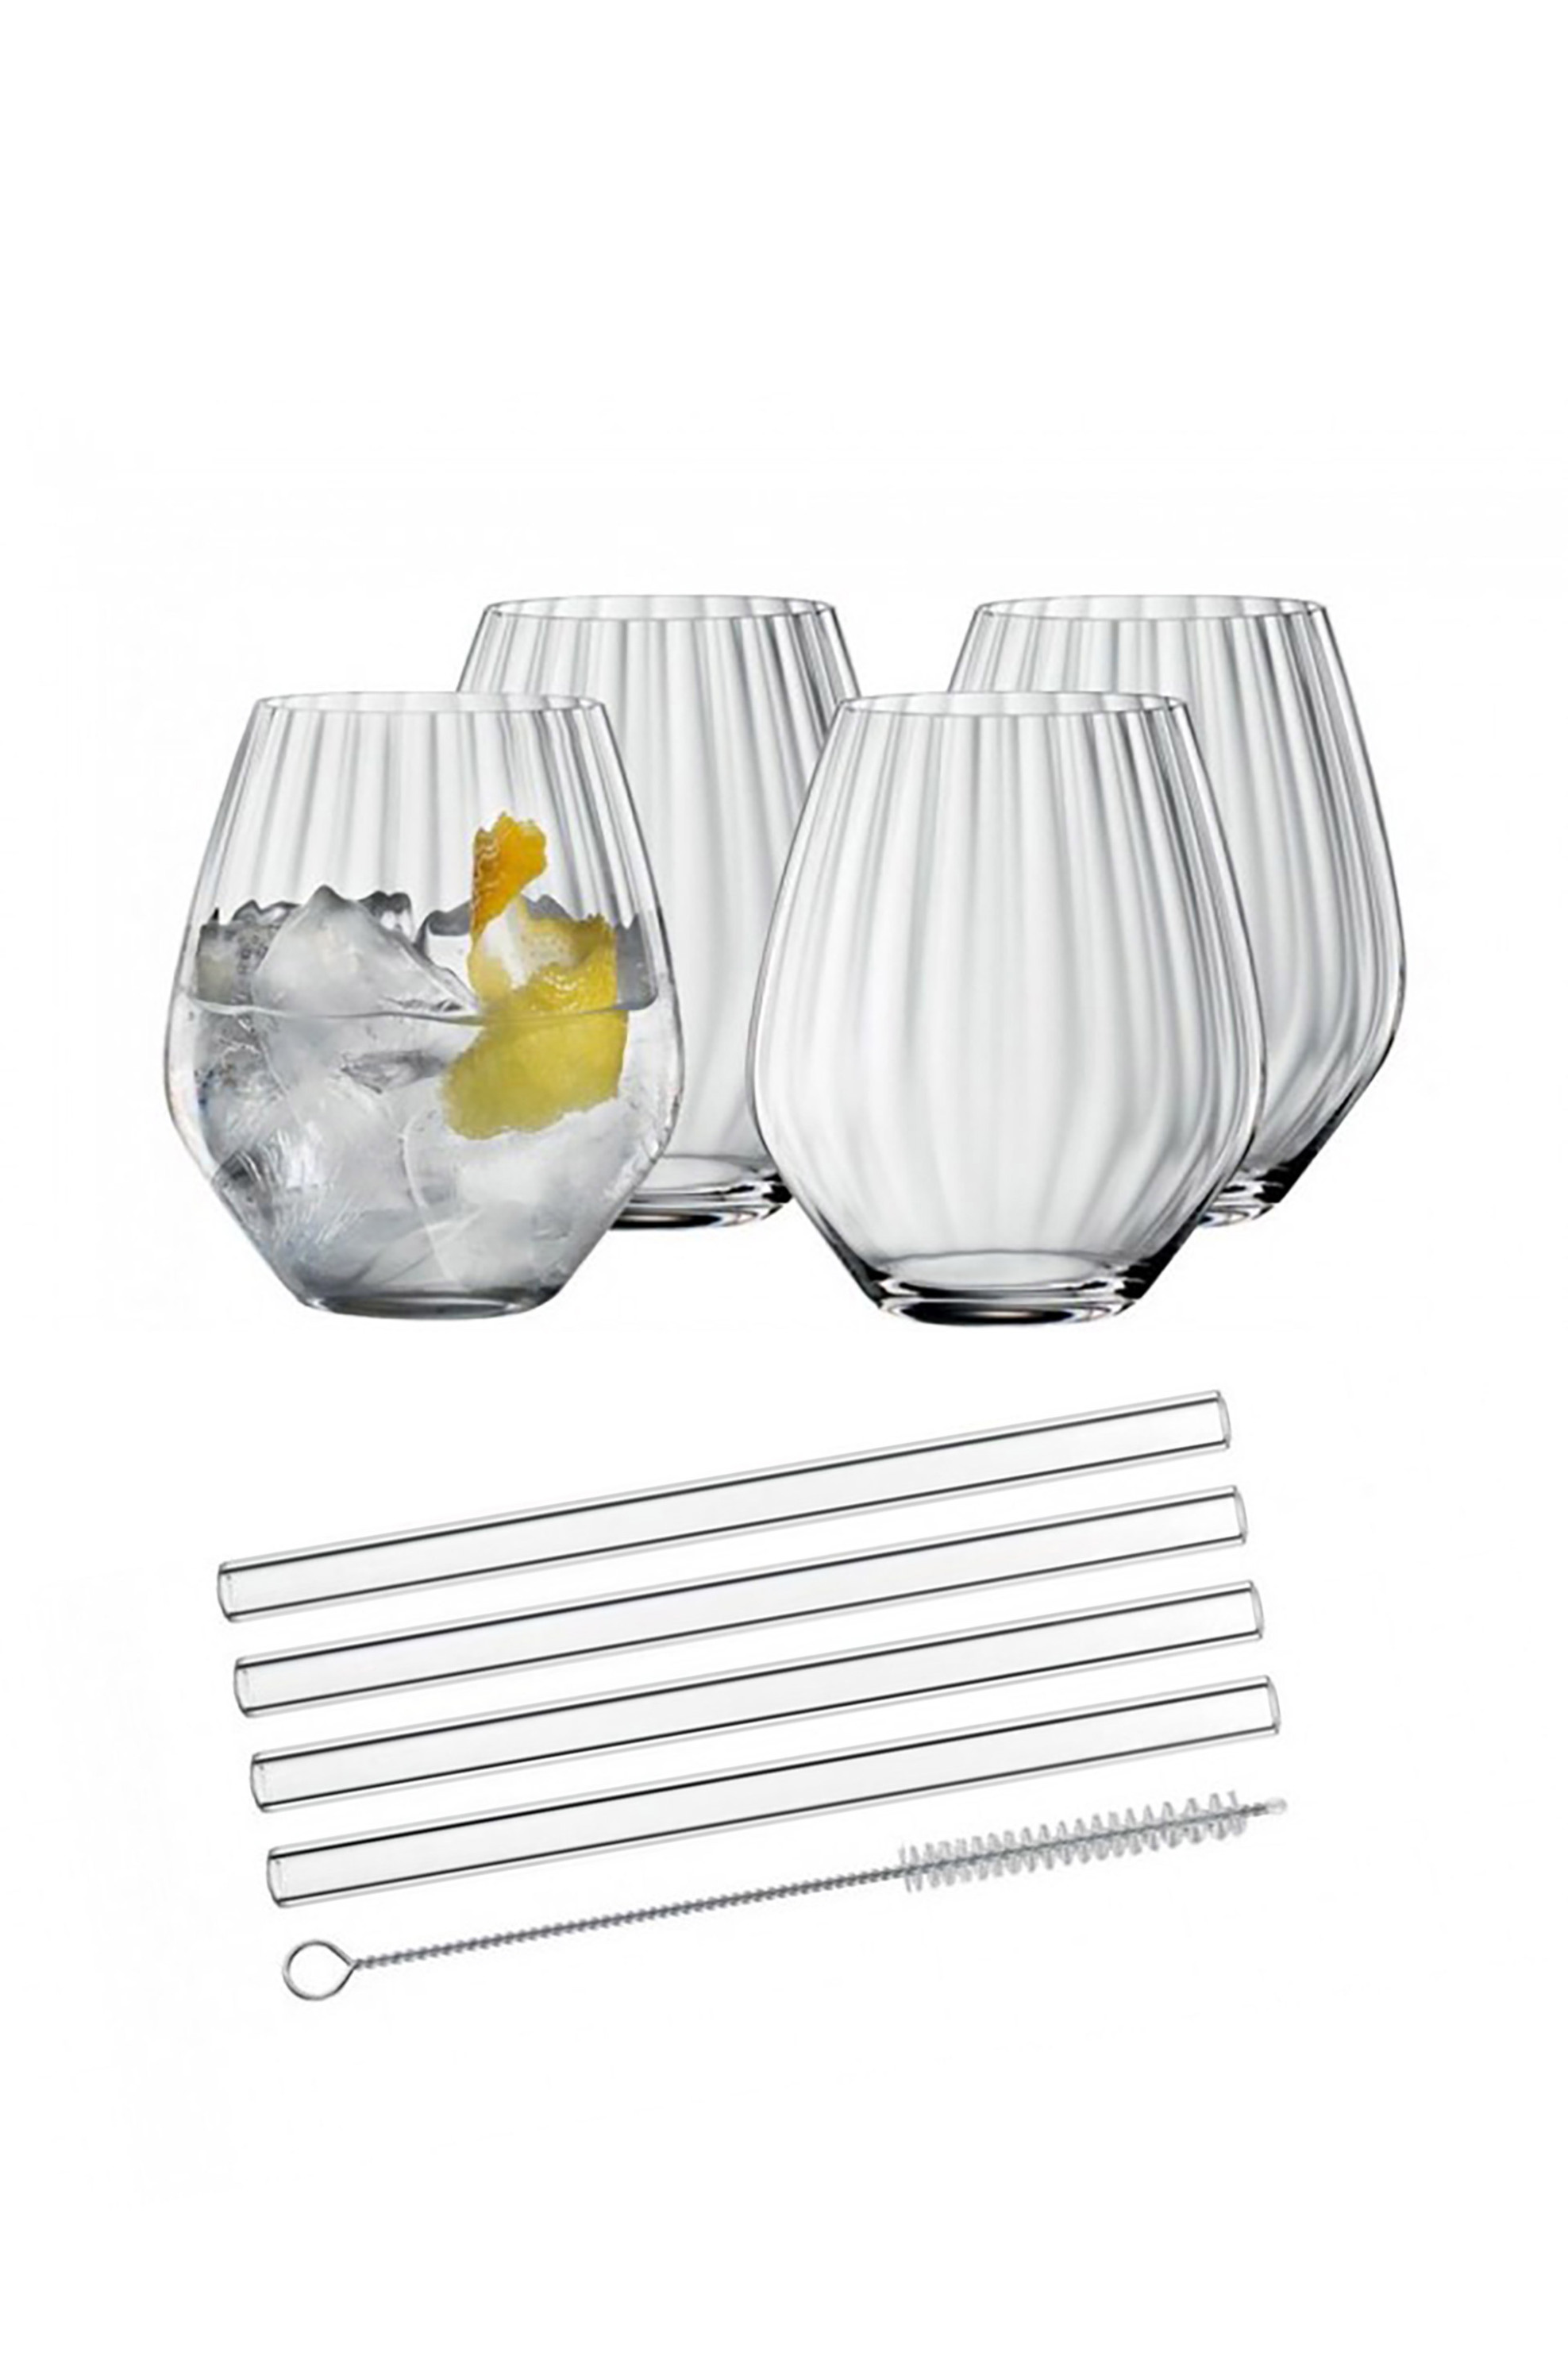 Home > ΚΟΥΖΙΝΑ > Υαλικά > Ποτήρια Nachtmann σετ 4 γυάλινα ποτήρια για gin & tonic με καλαμάκια 650 ml - 104367